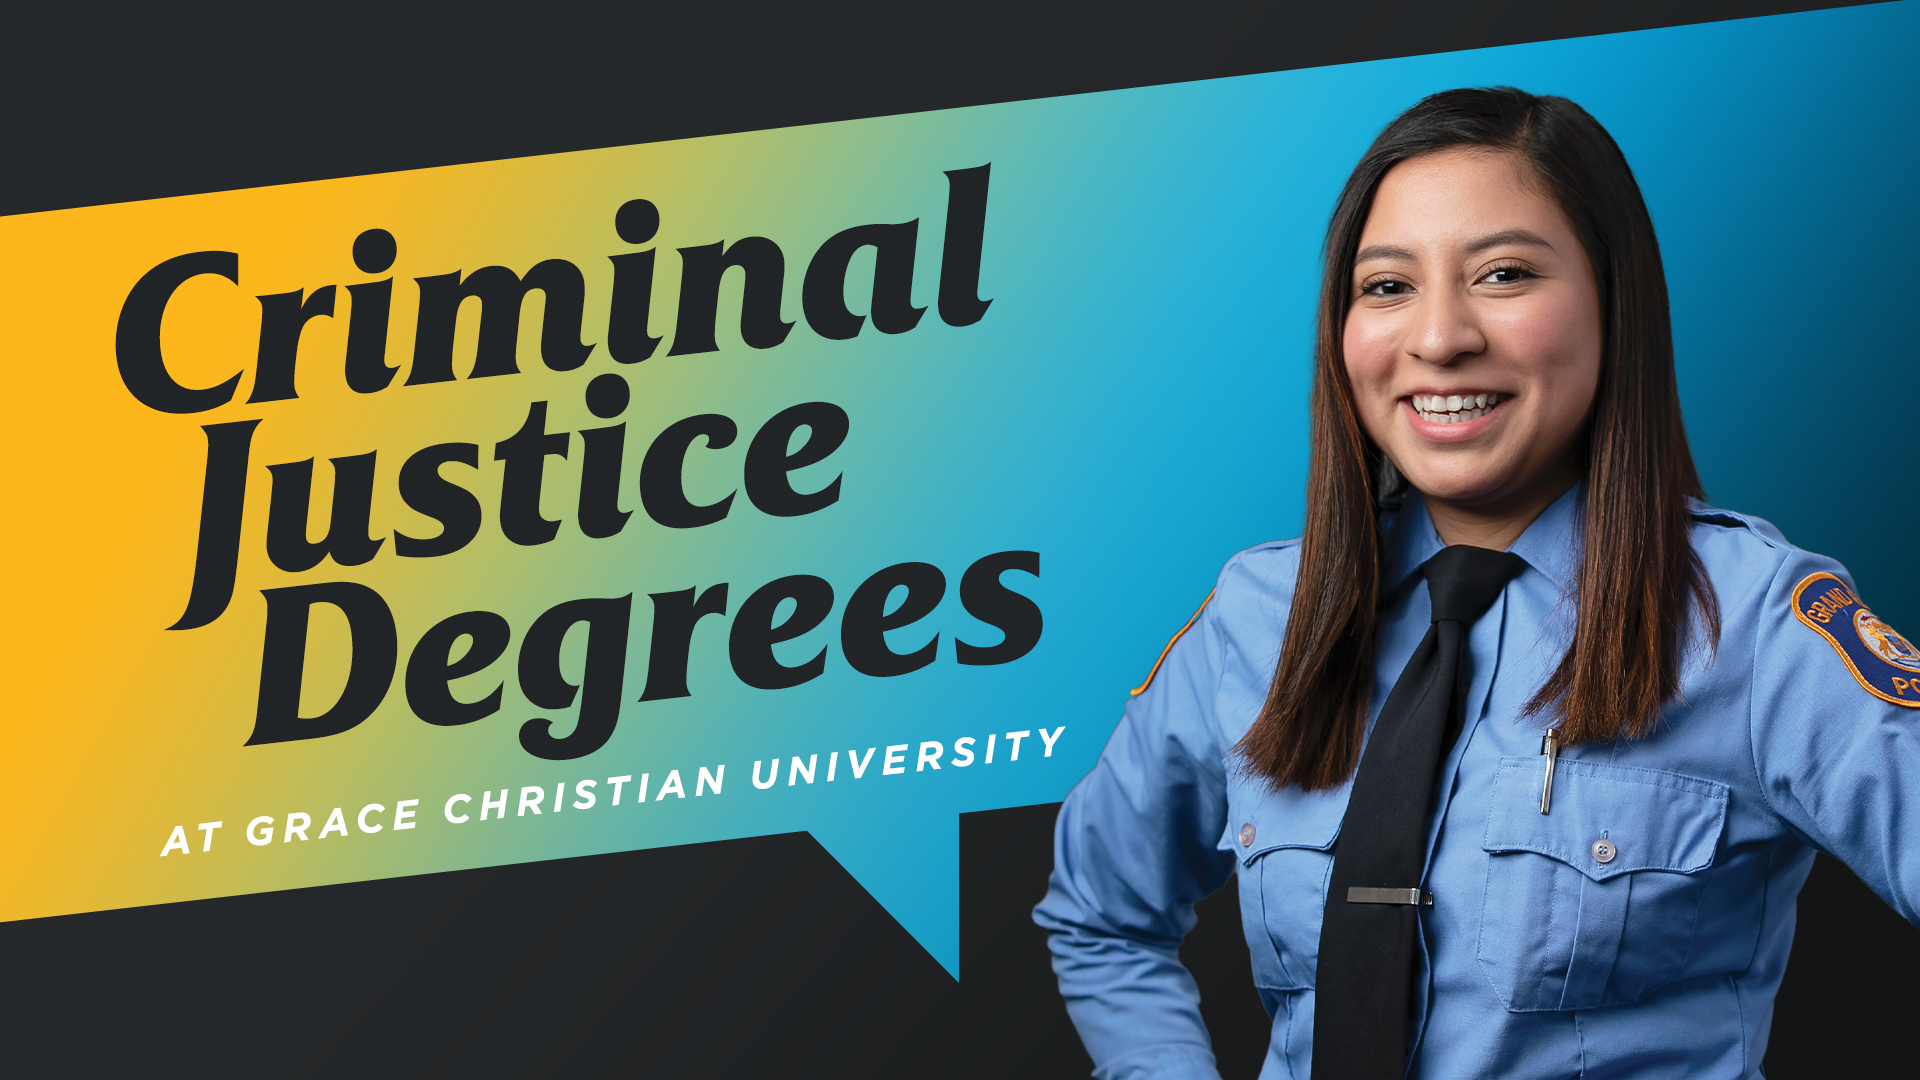 Criminal Justice Degrees at Grace Christian University